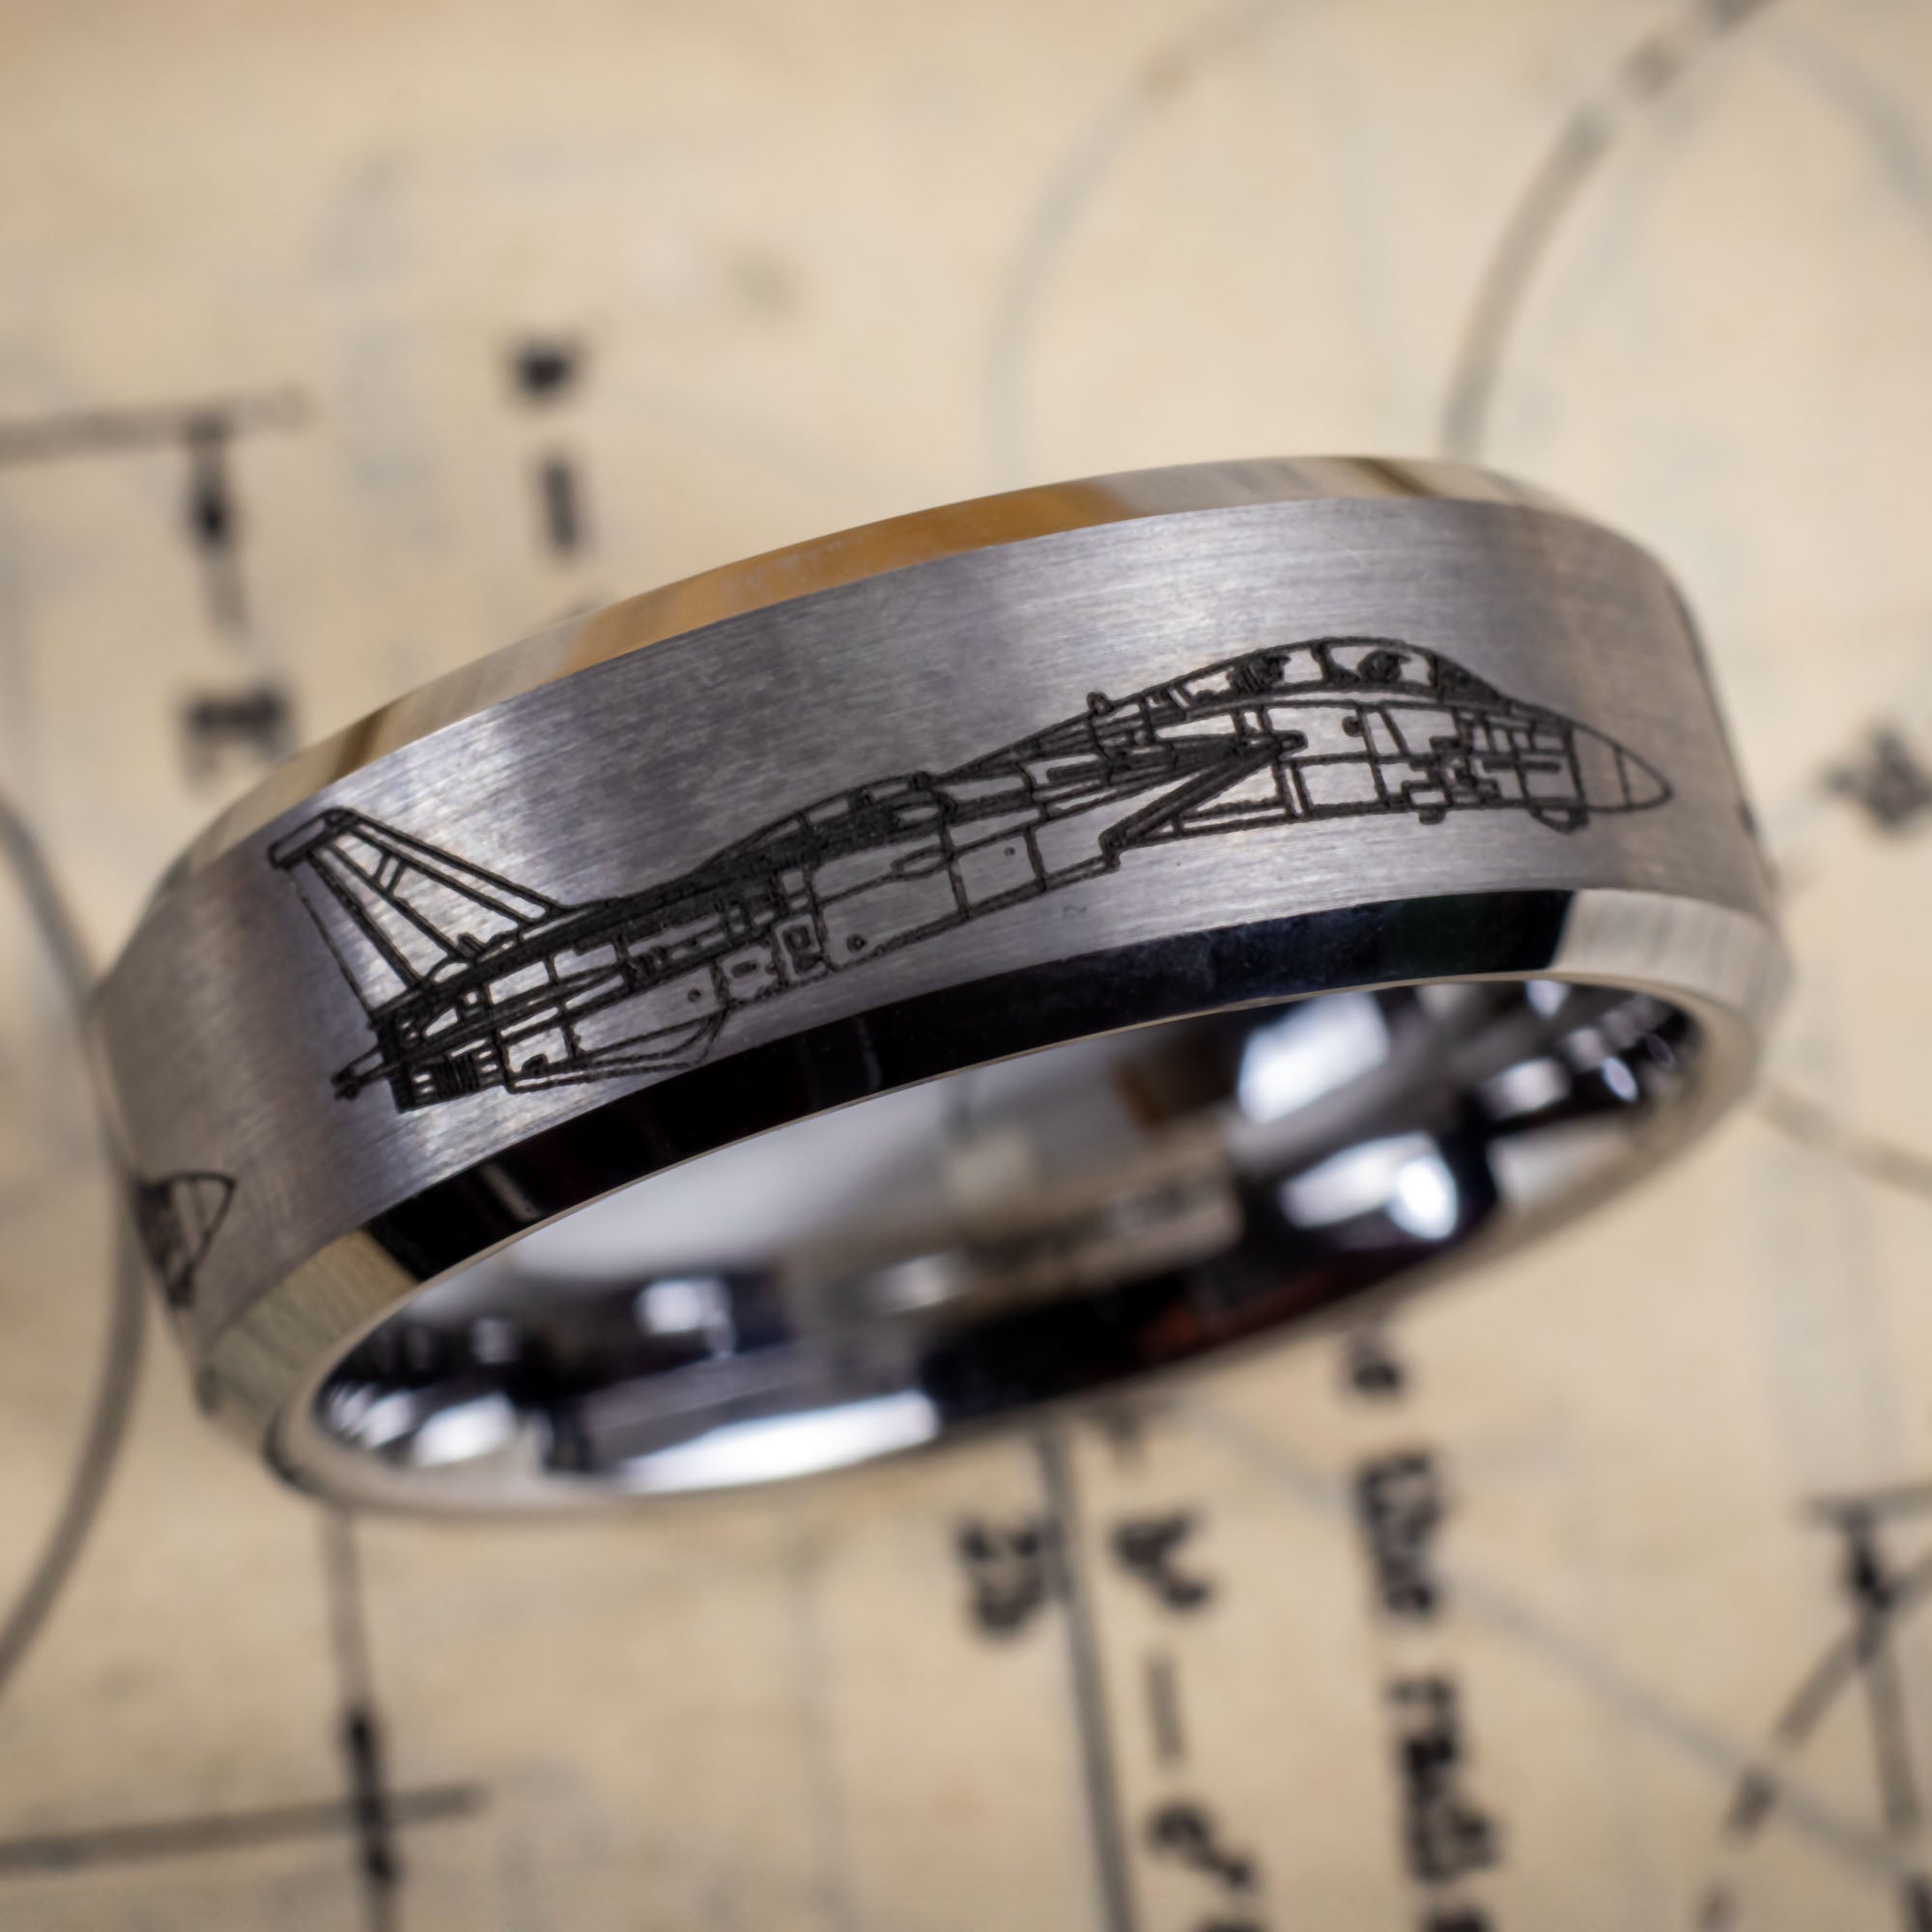 Beveled Tungsten Engraved F14 Tomcat Ring